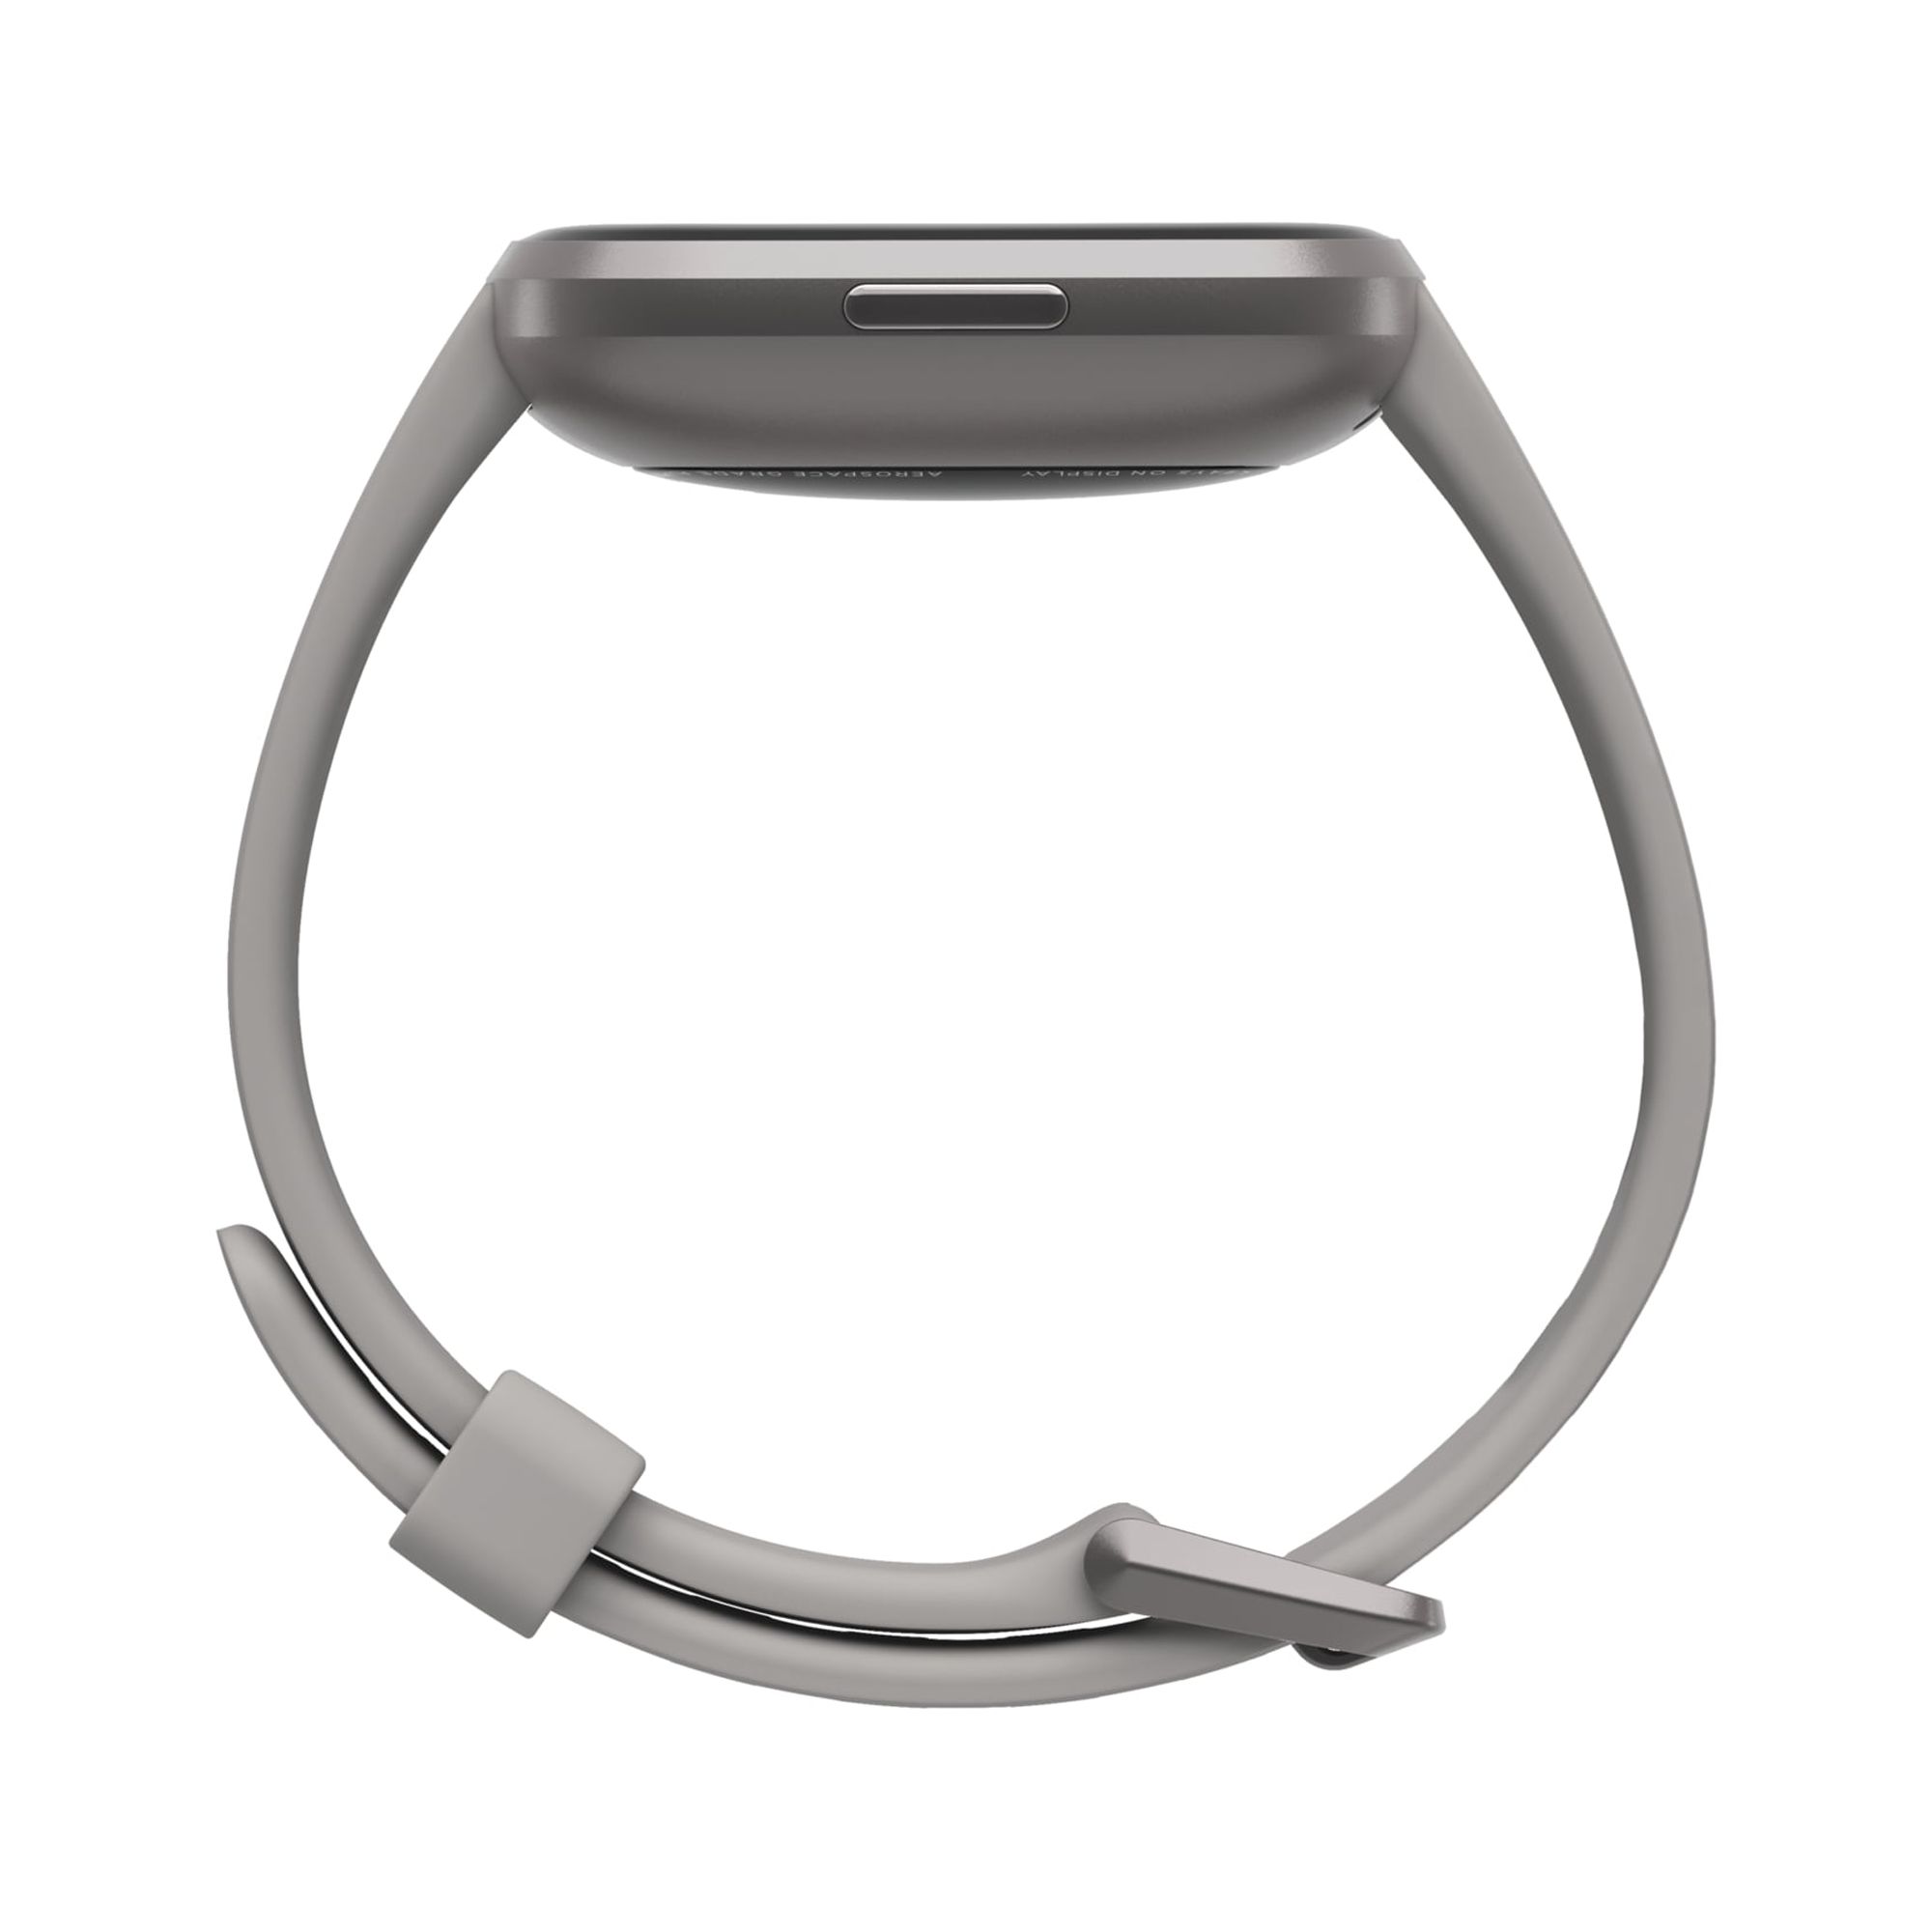 Fitbit Versa 2 Health & Fitness Smartwatch - Stone/Mist Grey Aluminum - image 4 of 7